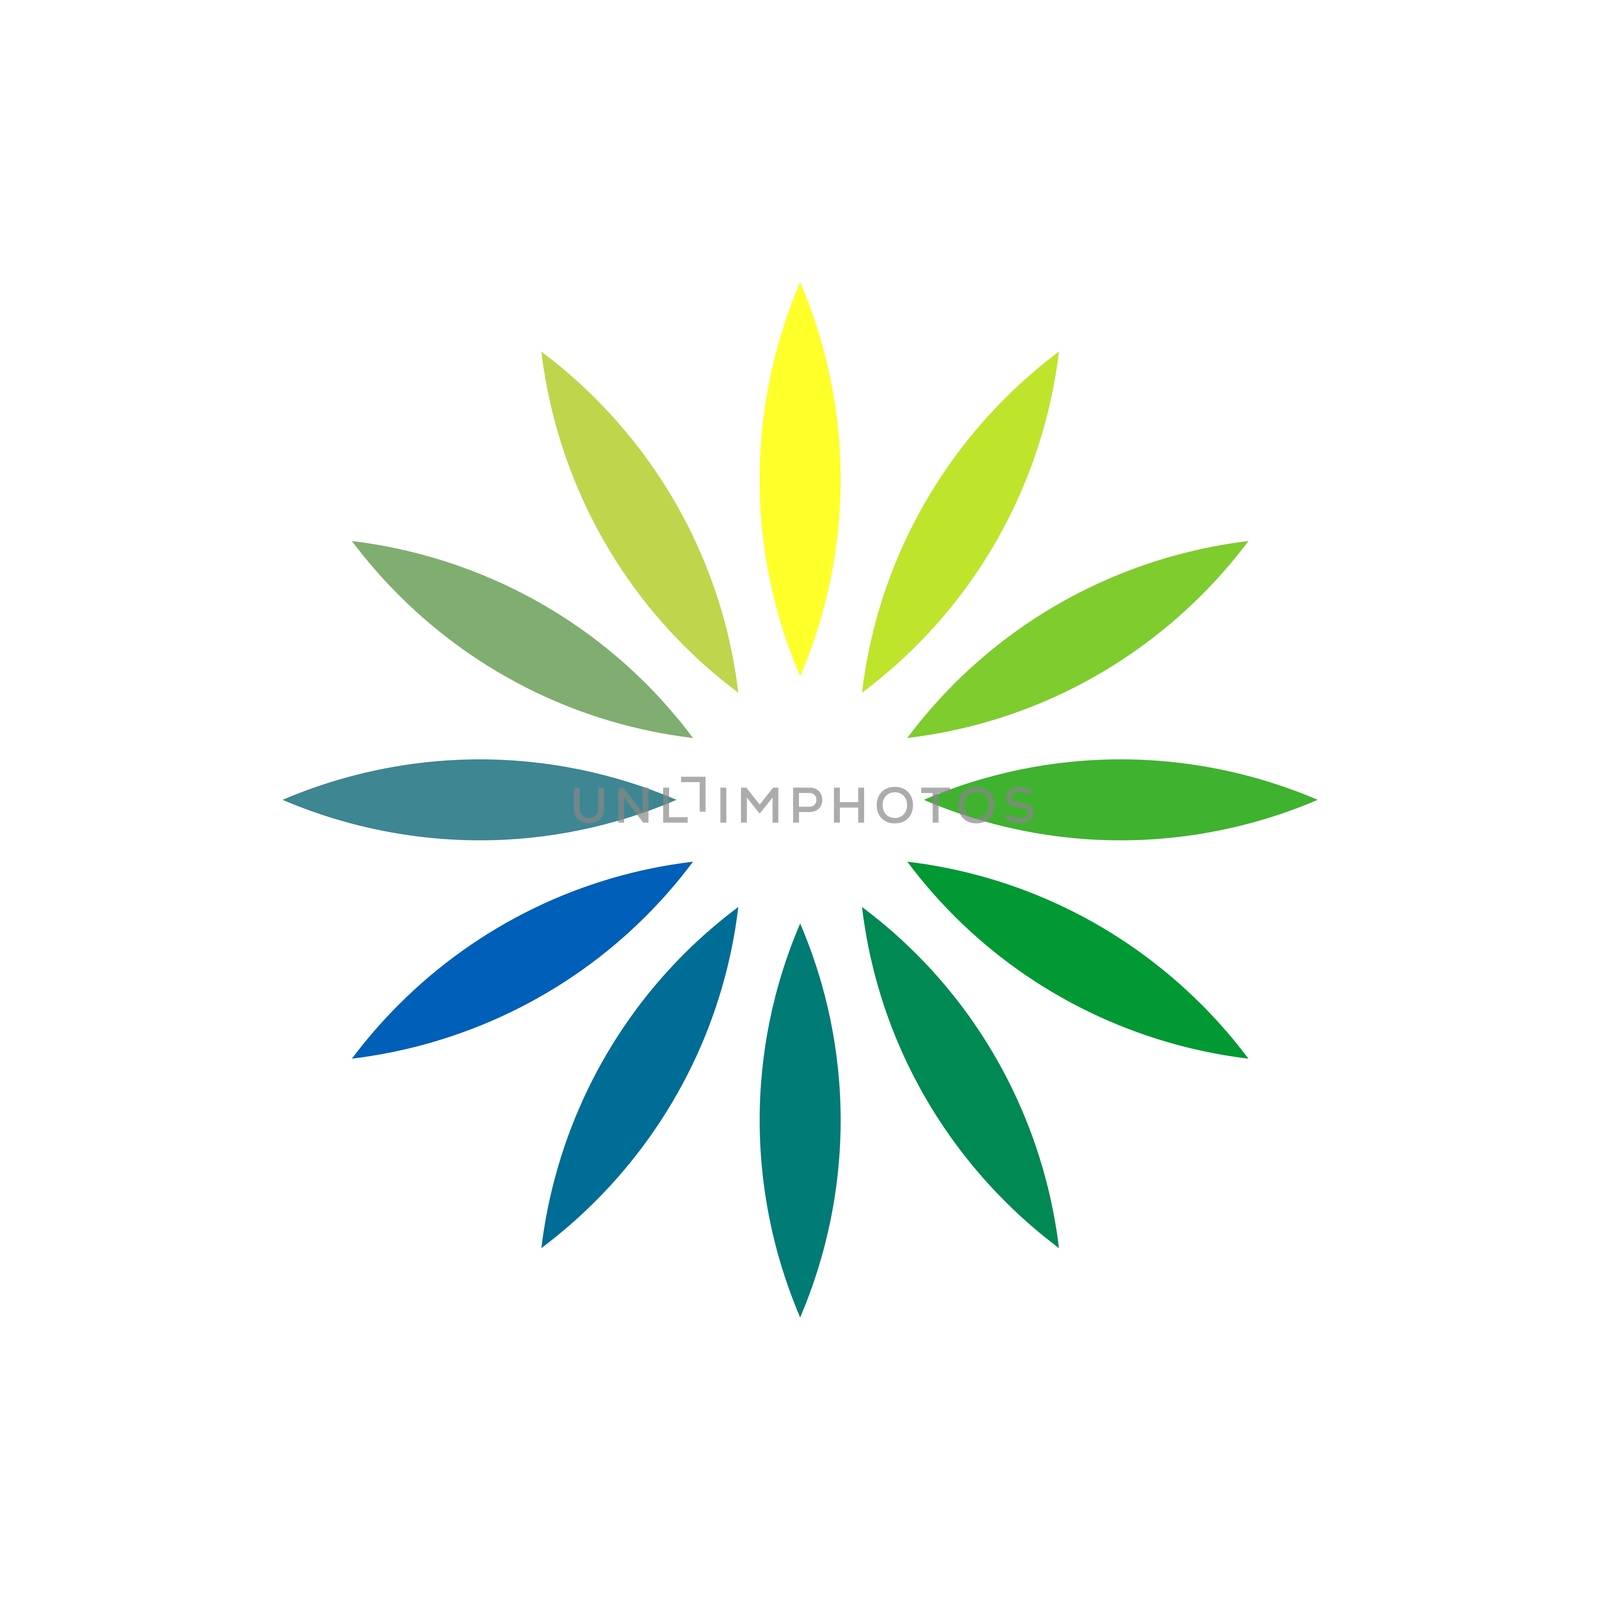 Colorful Sun Flower Logo Template Illustration Design. Vector EPS 10. by soponyono1